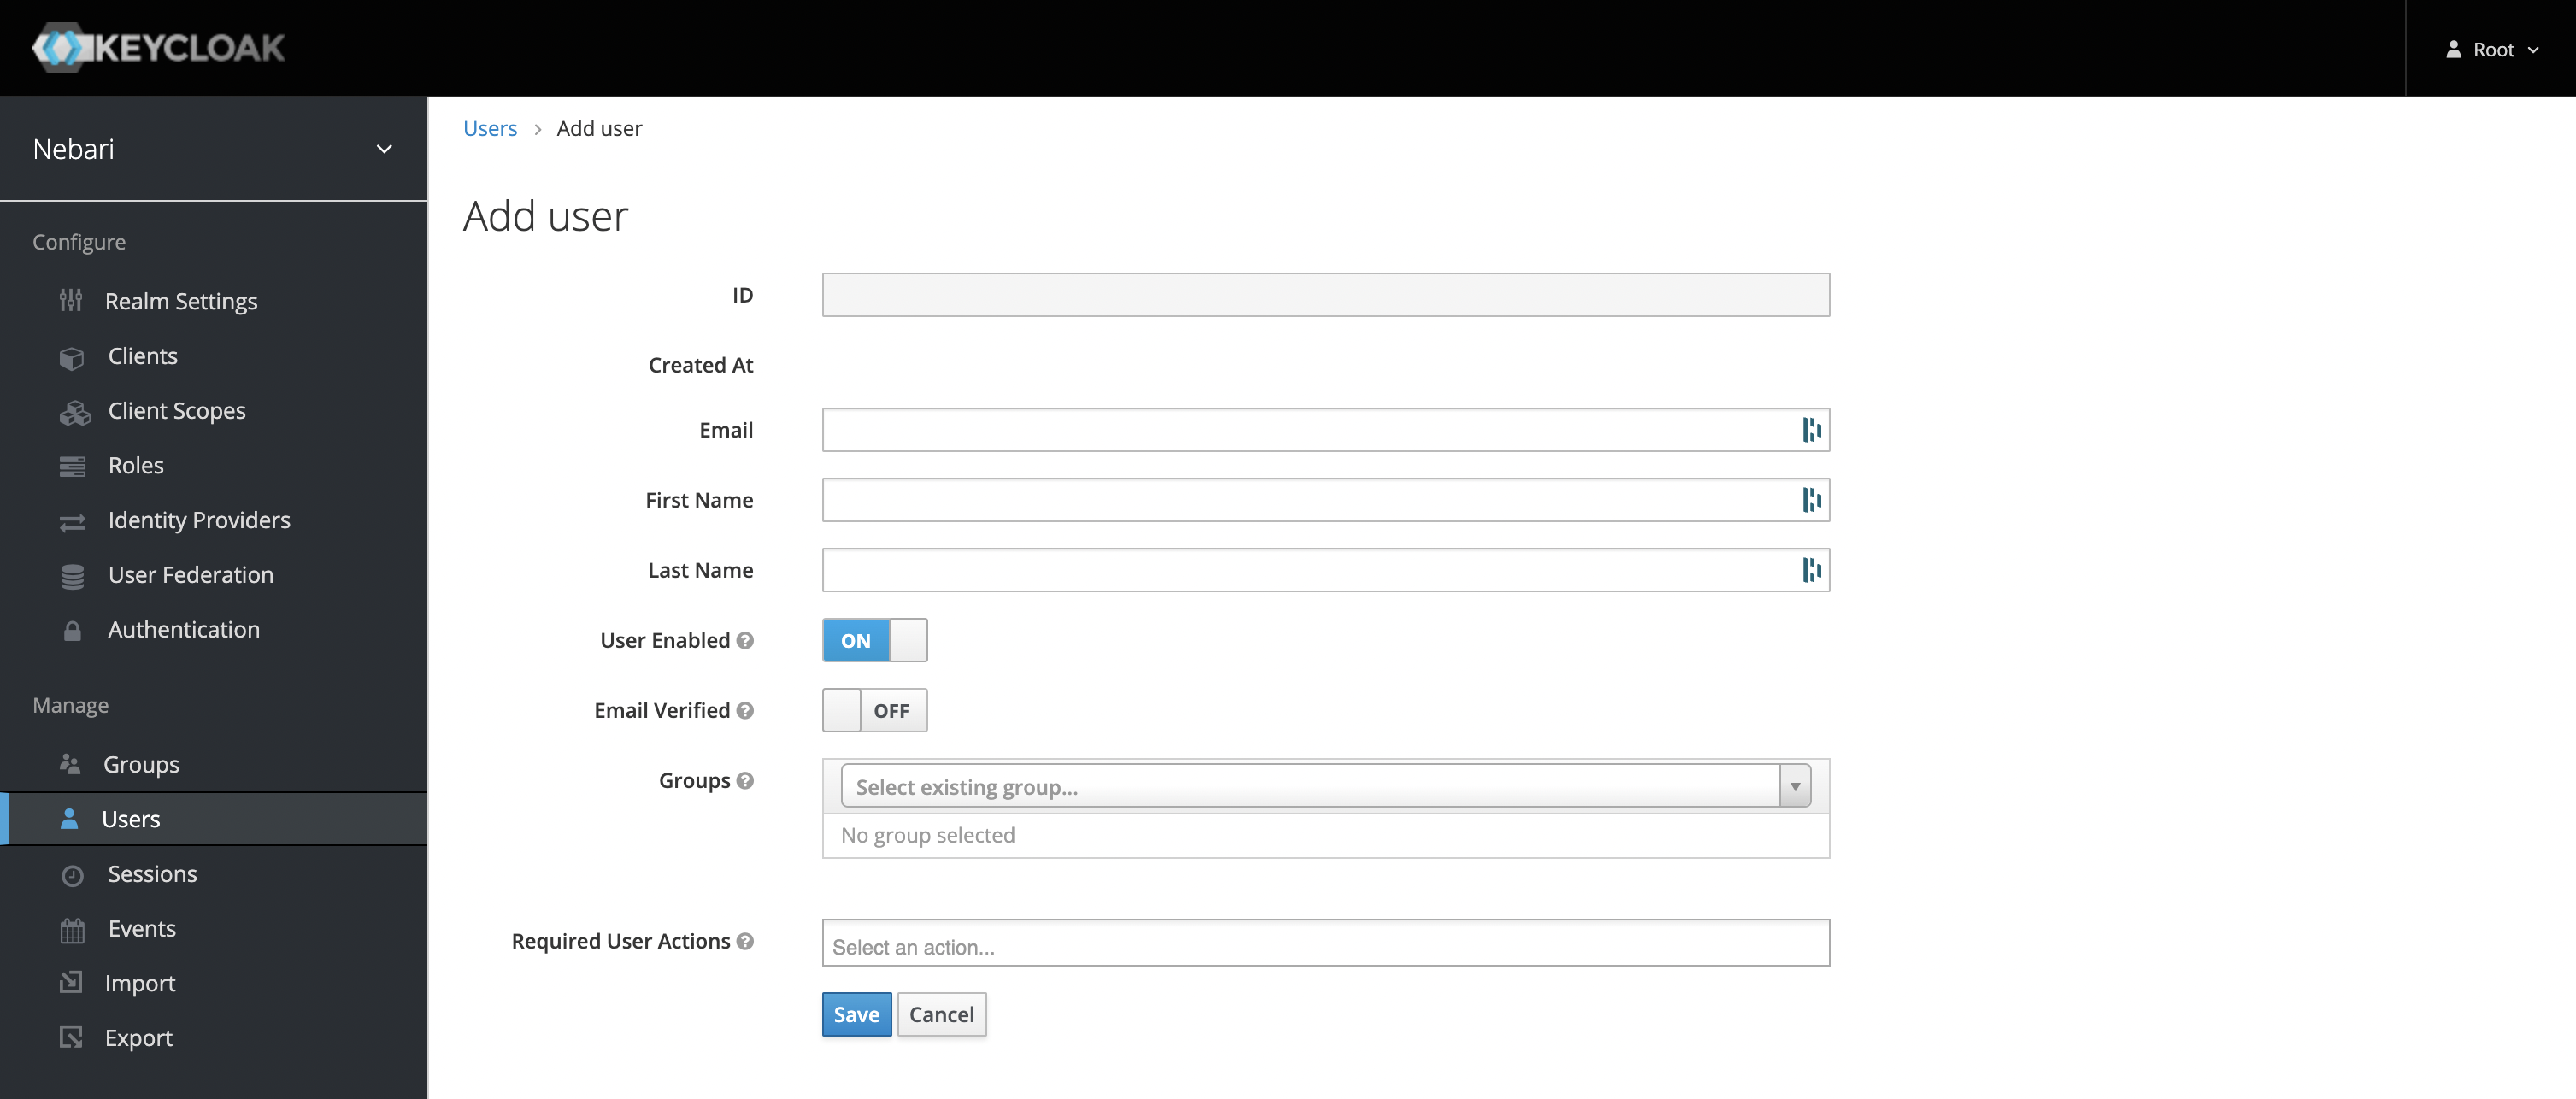 Keycloak add user tab screenshot - new user form